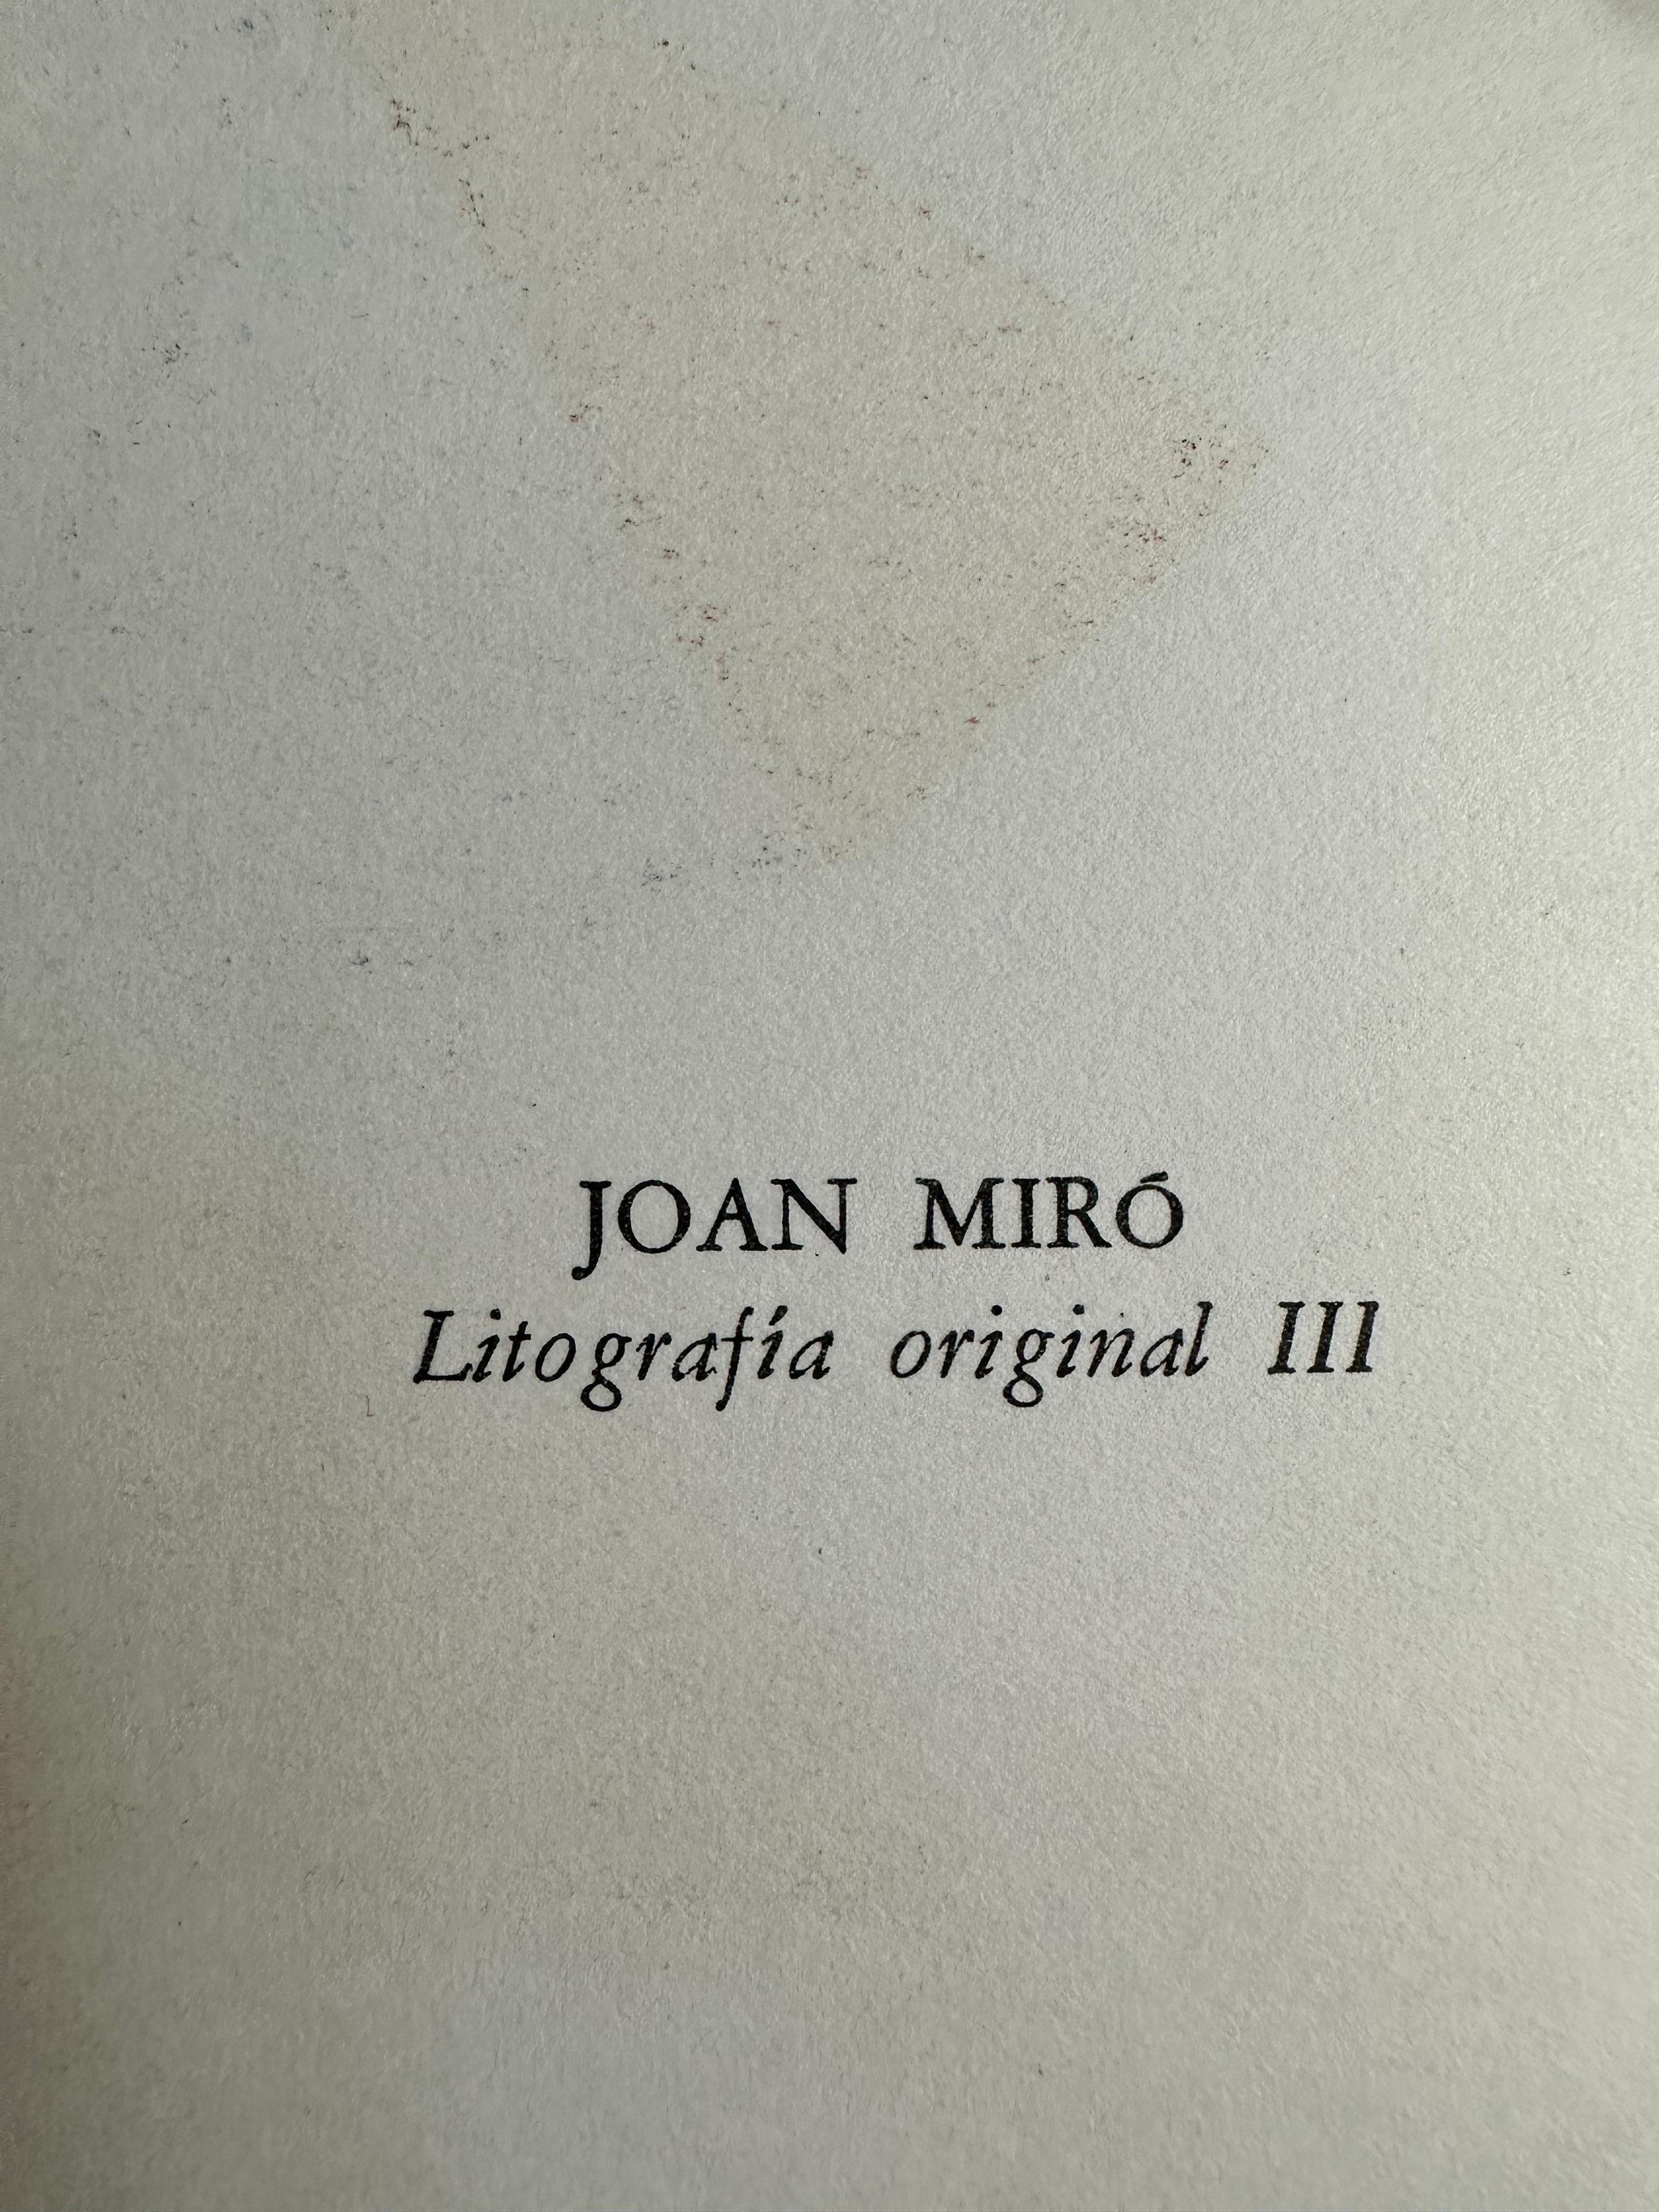 Lithographie III - Print de Joan Miró